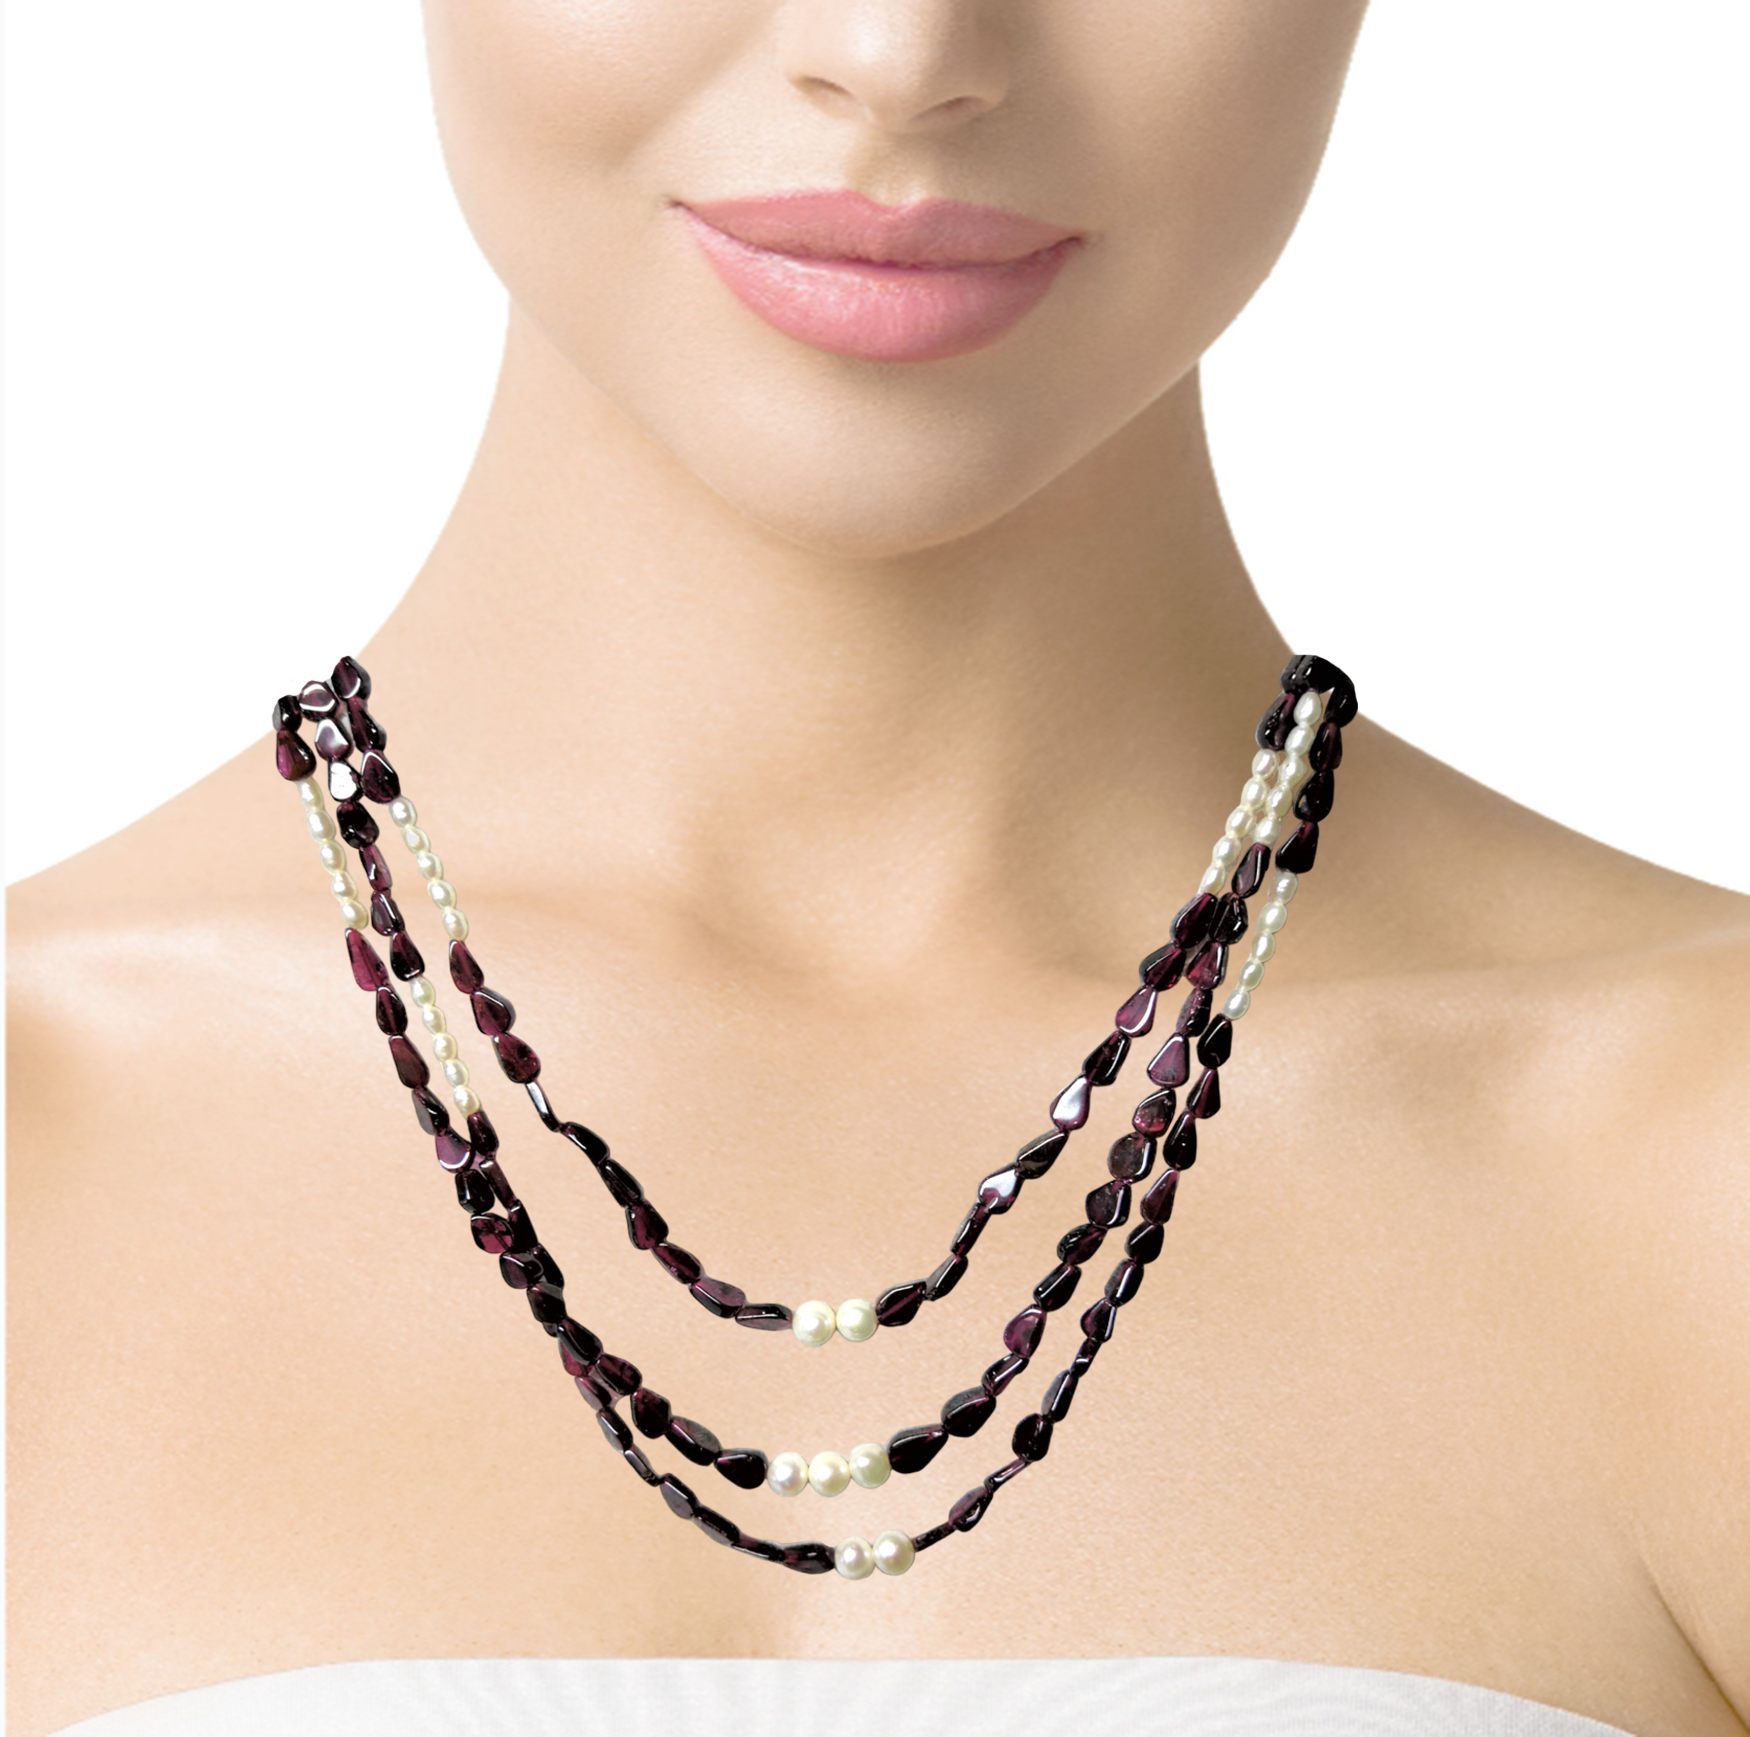 Natural Handmade Necklace 16"-18" Garnet Pearls Layered Gemstone Beads Jewelry